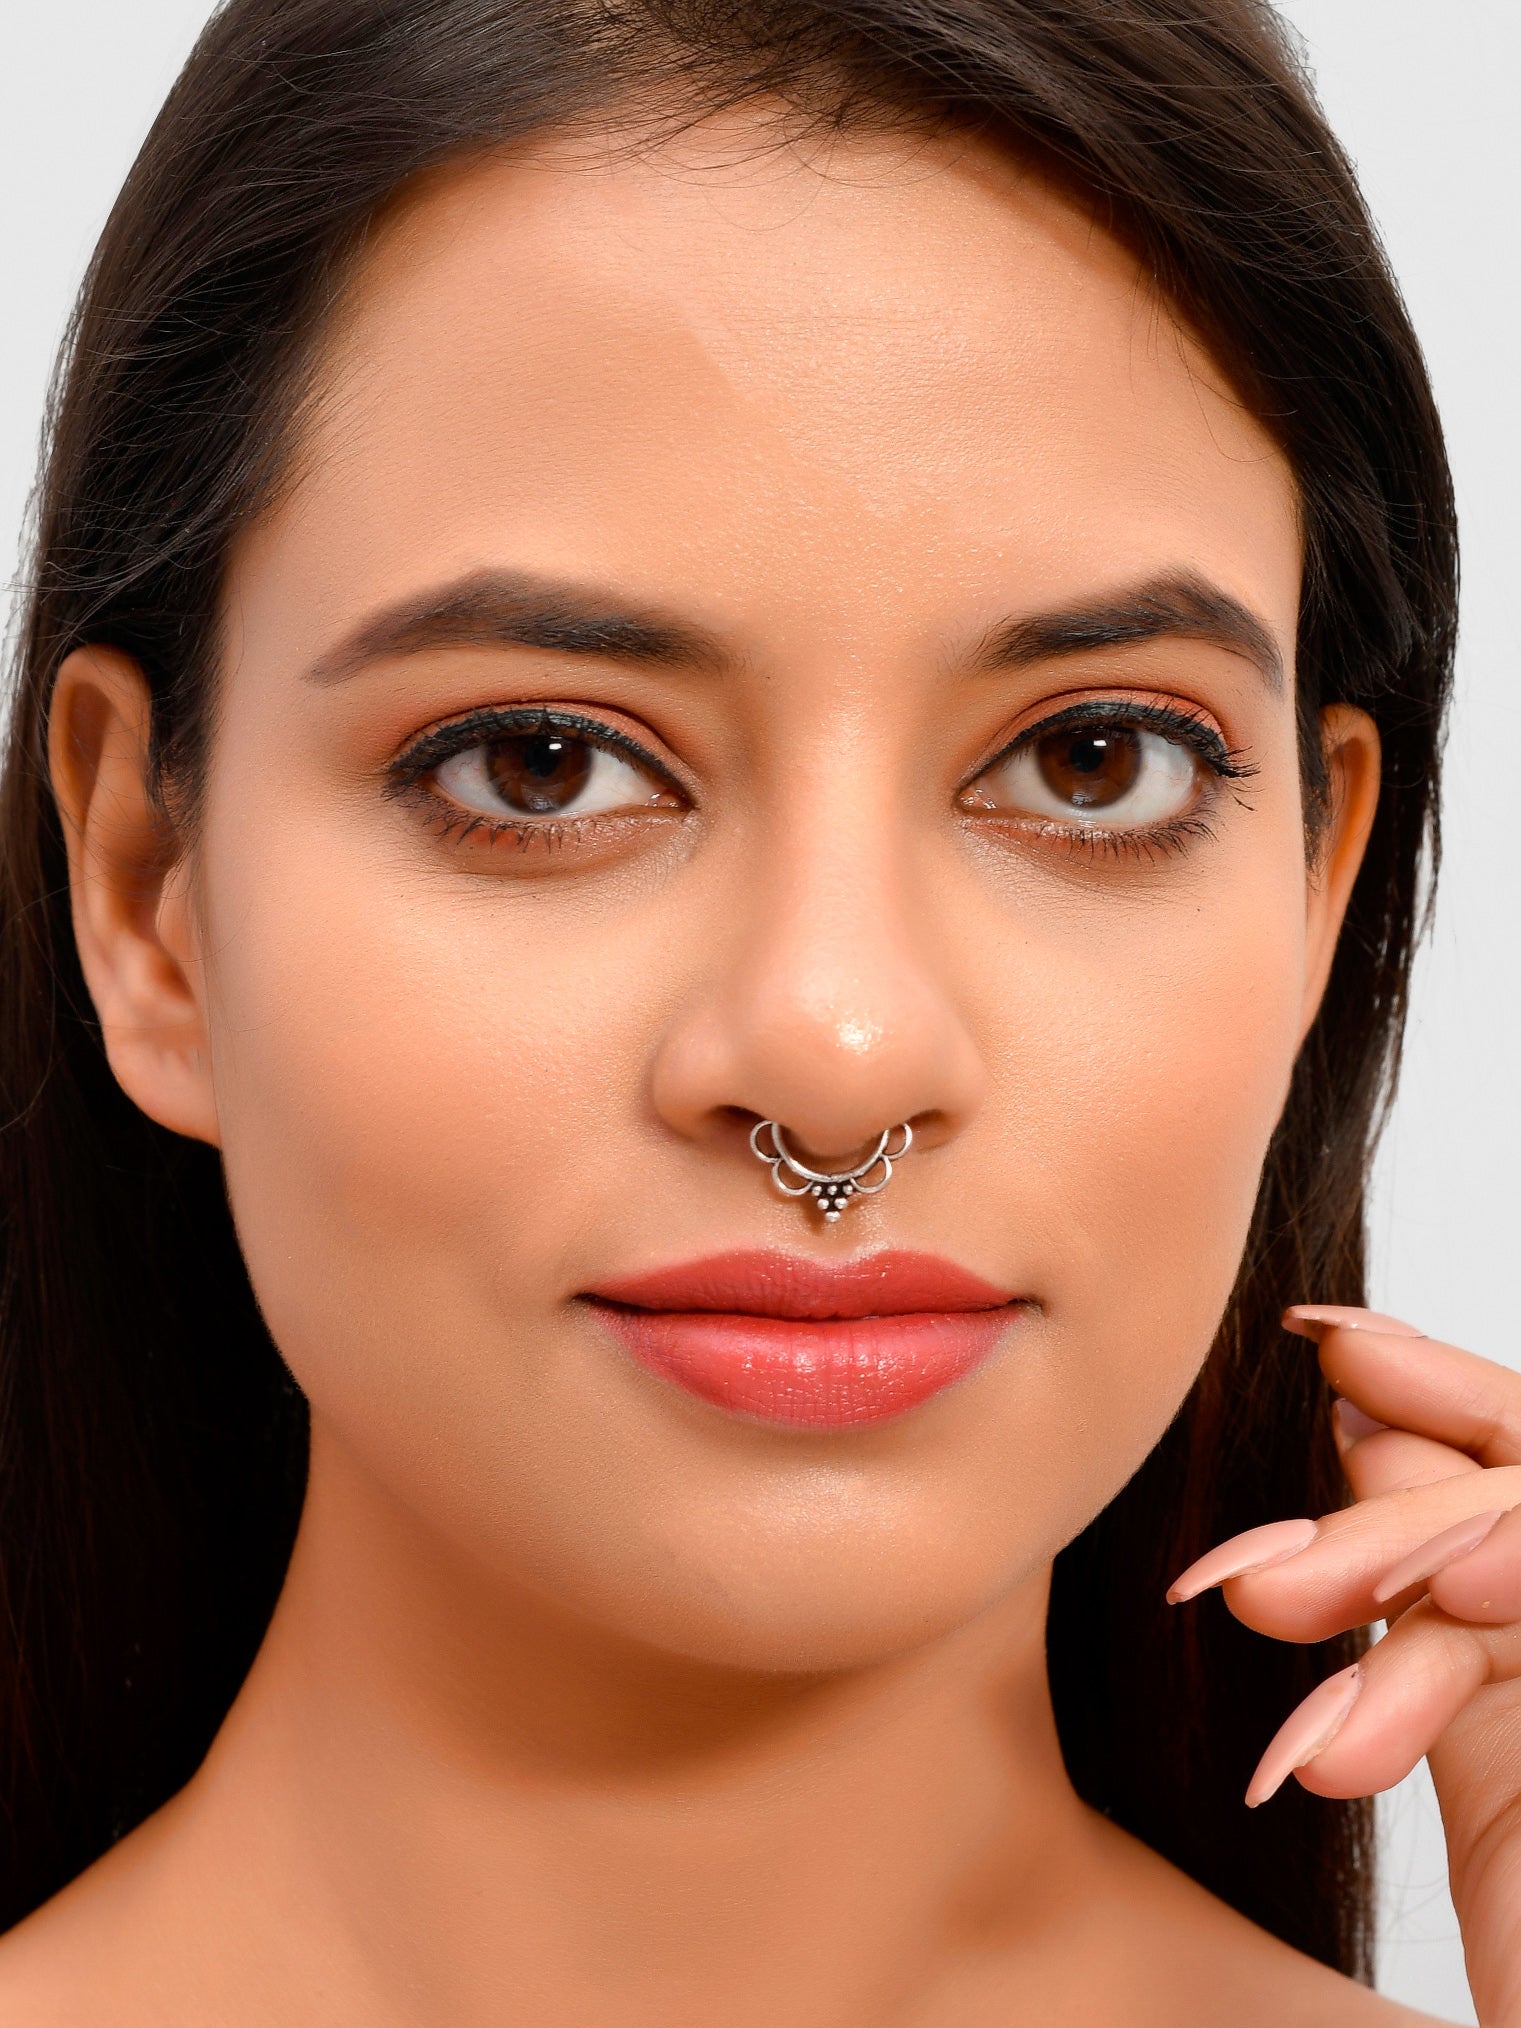 Buy PARNA Traditional Maharashtrian Nath/Nose Ring (Press) Oxidised Silver  Marathi Wedding Jewellery Bridal Latest, Stylish Oxidized Nose Pin For  Women, Girls at Amazon.in